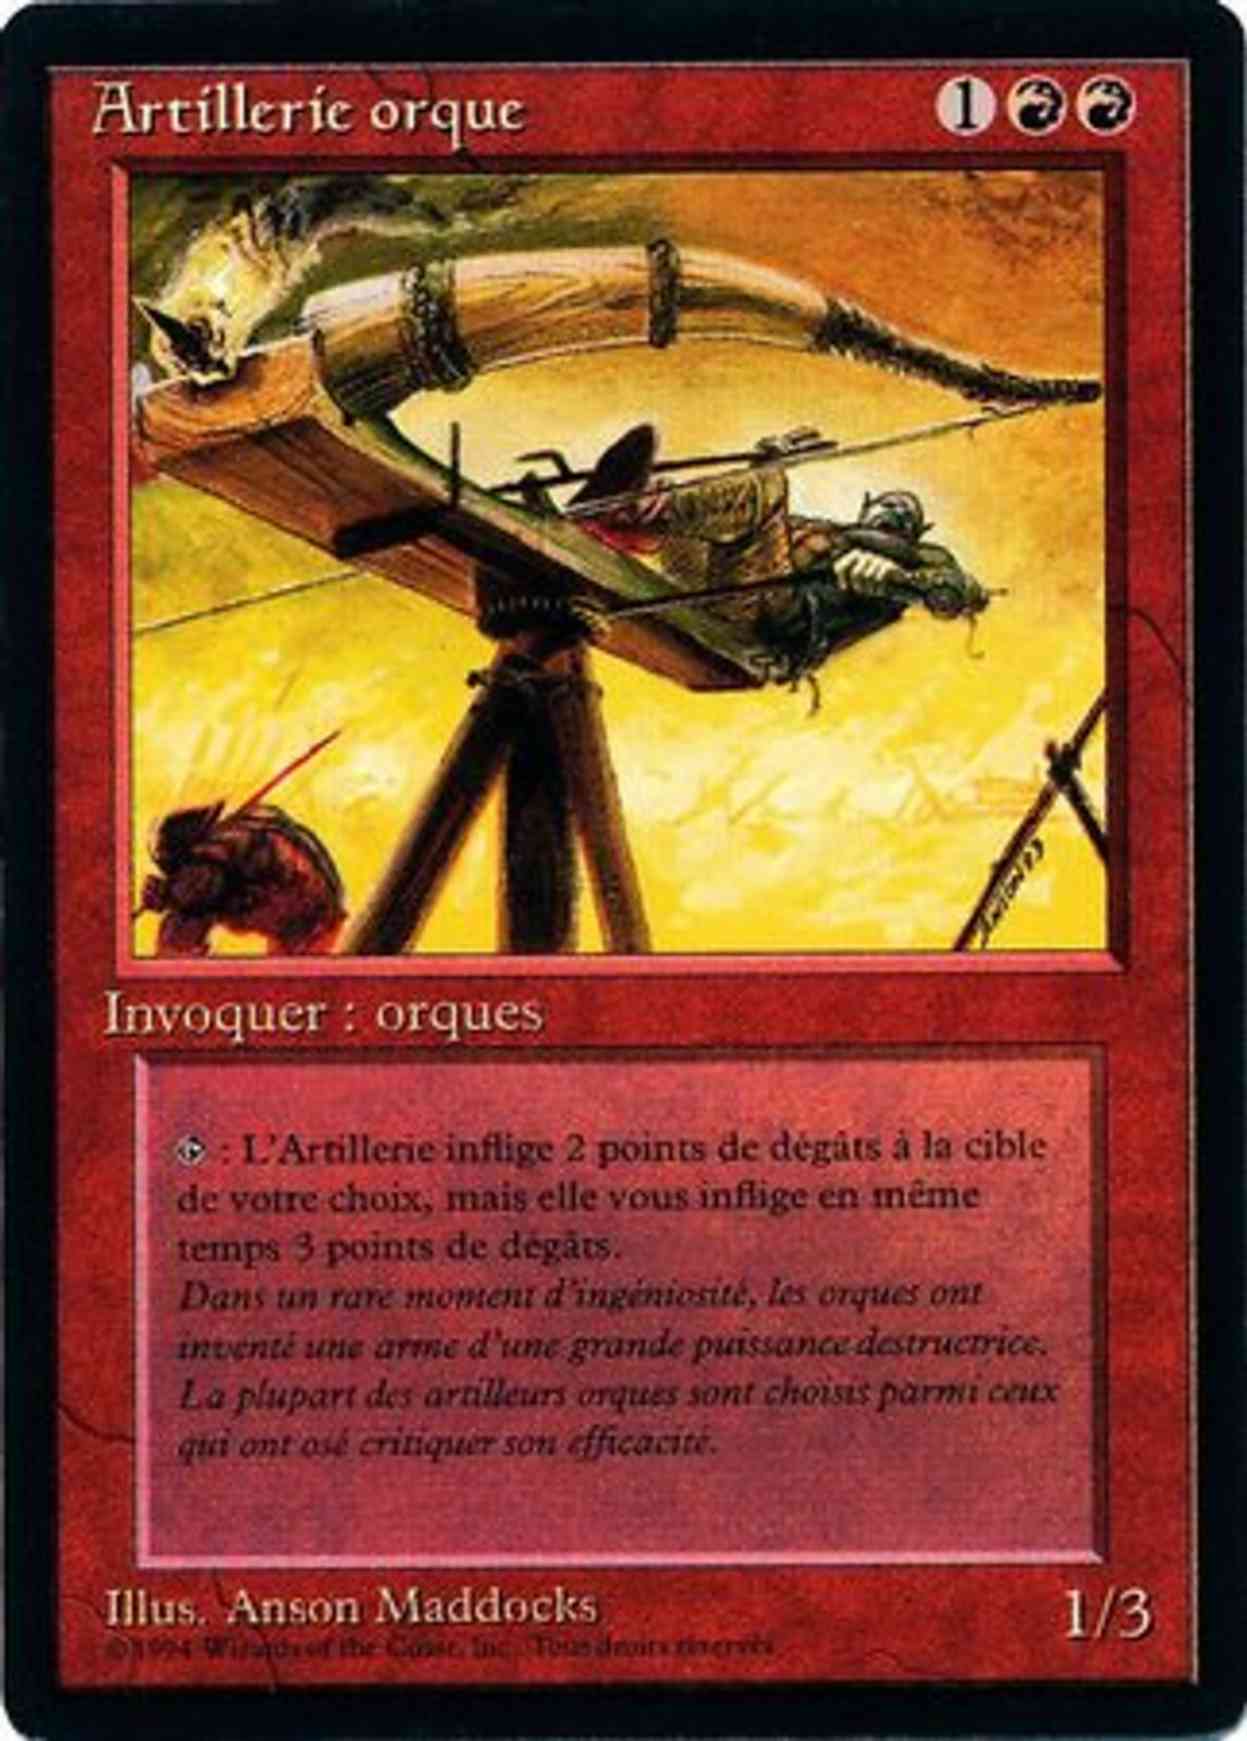 Orcish Artillery magic card front